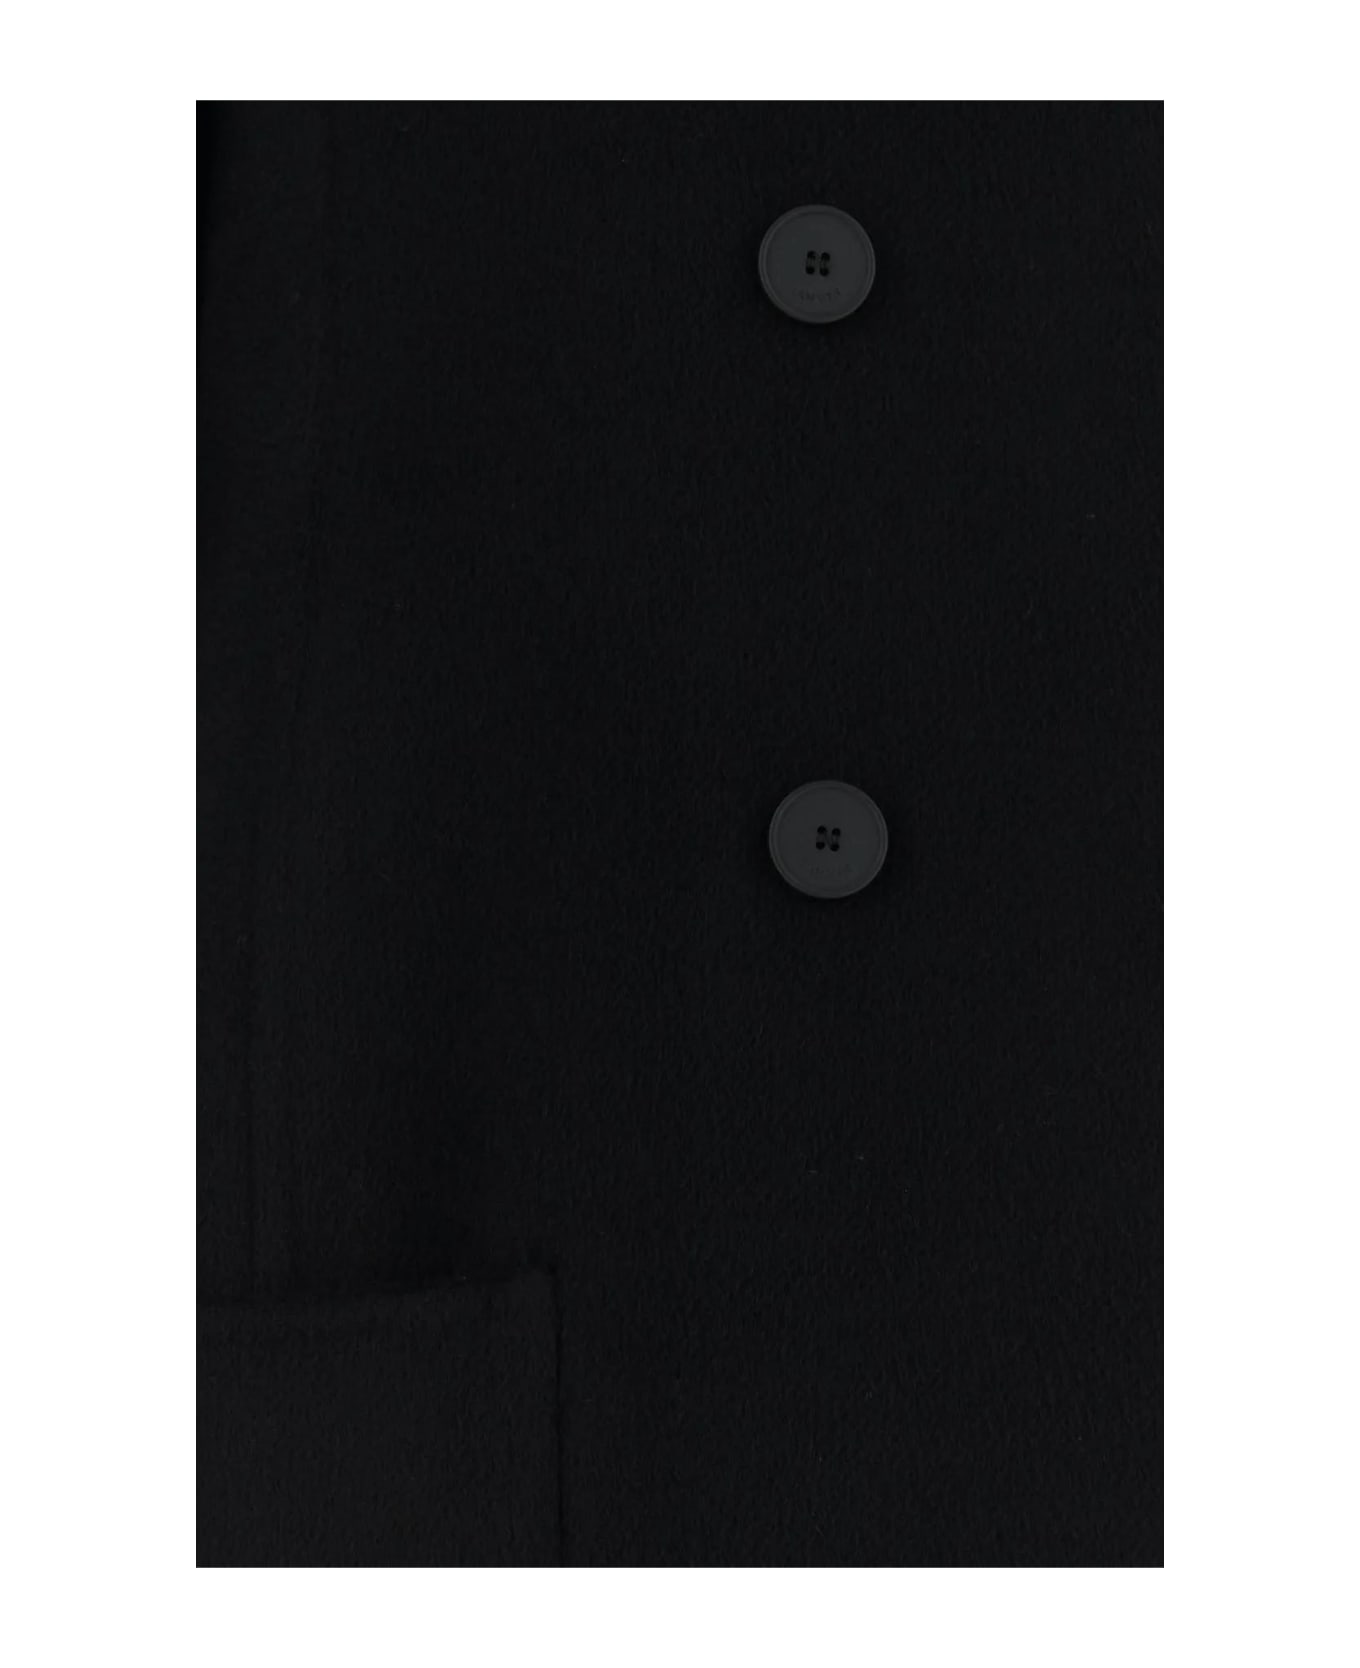 Lanvin Black Cashmere Coat - Black